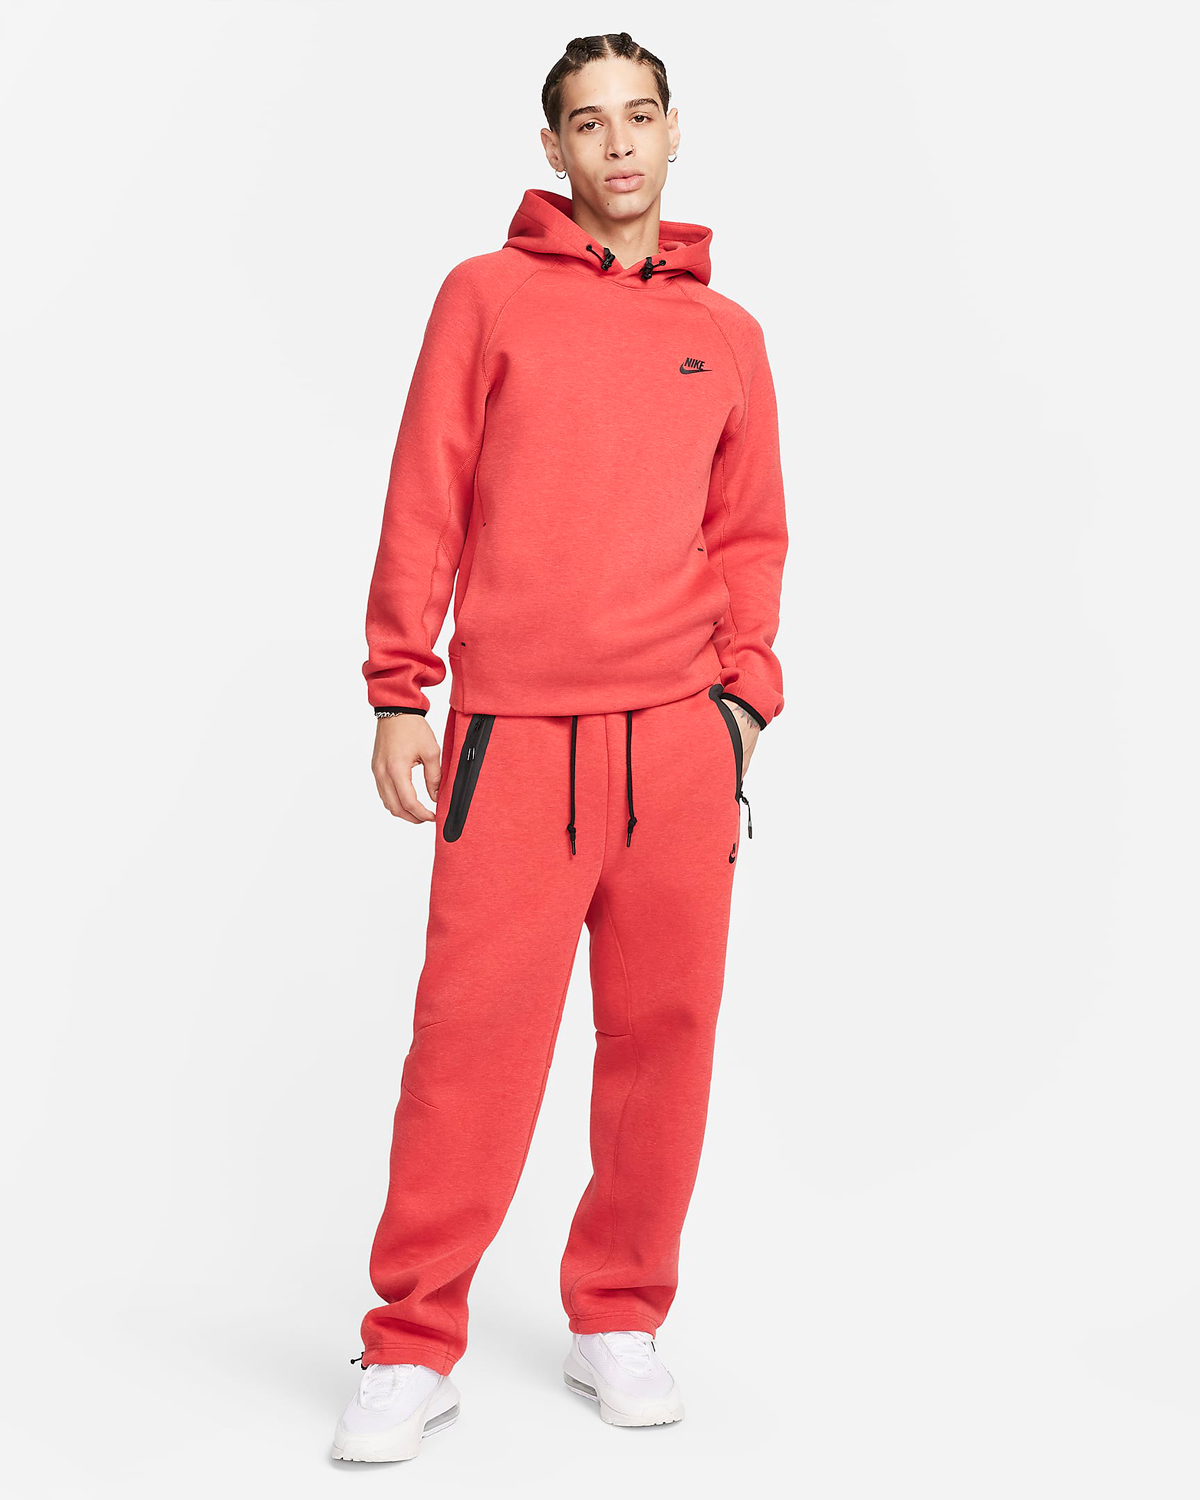 Nike Tech Fleece Open Hem Sweatpants Light University Red Heather Black Outfit